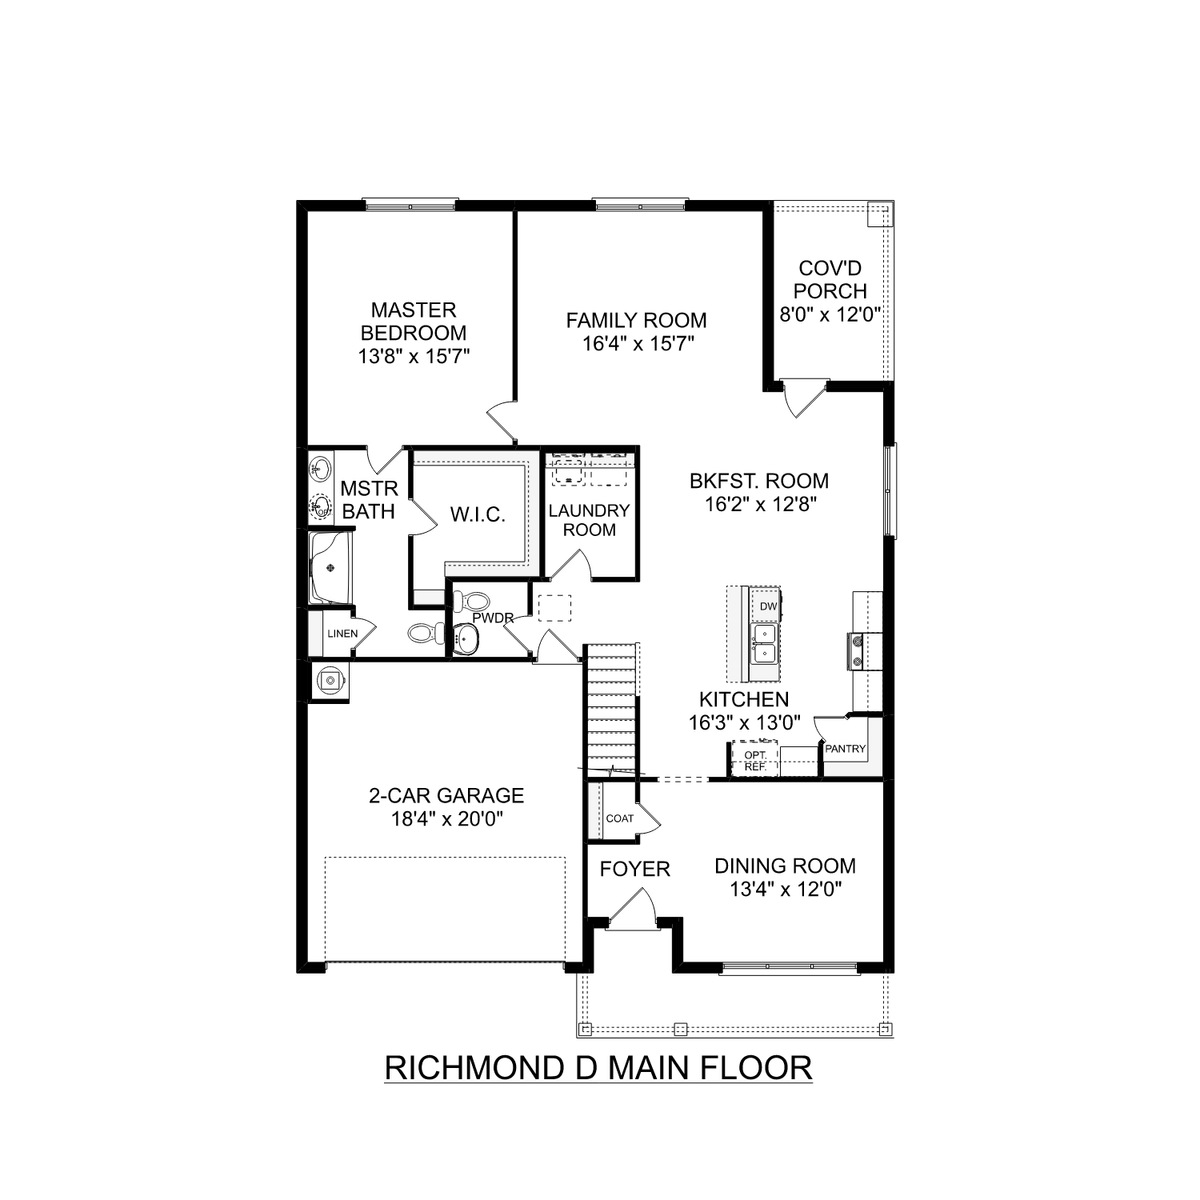 1 - The Richmond D buildable floor plan layout in Davidson Homes' Pavilion community.